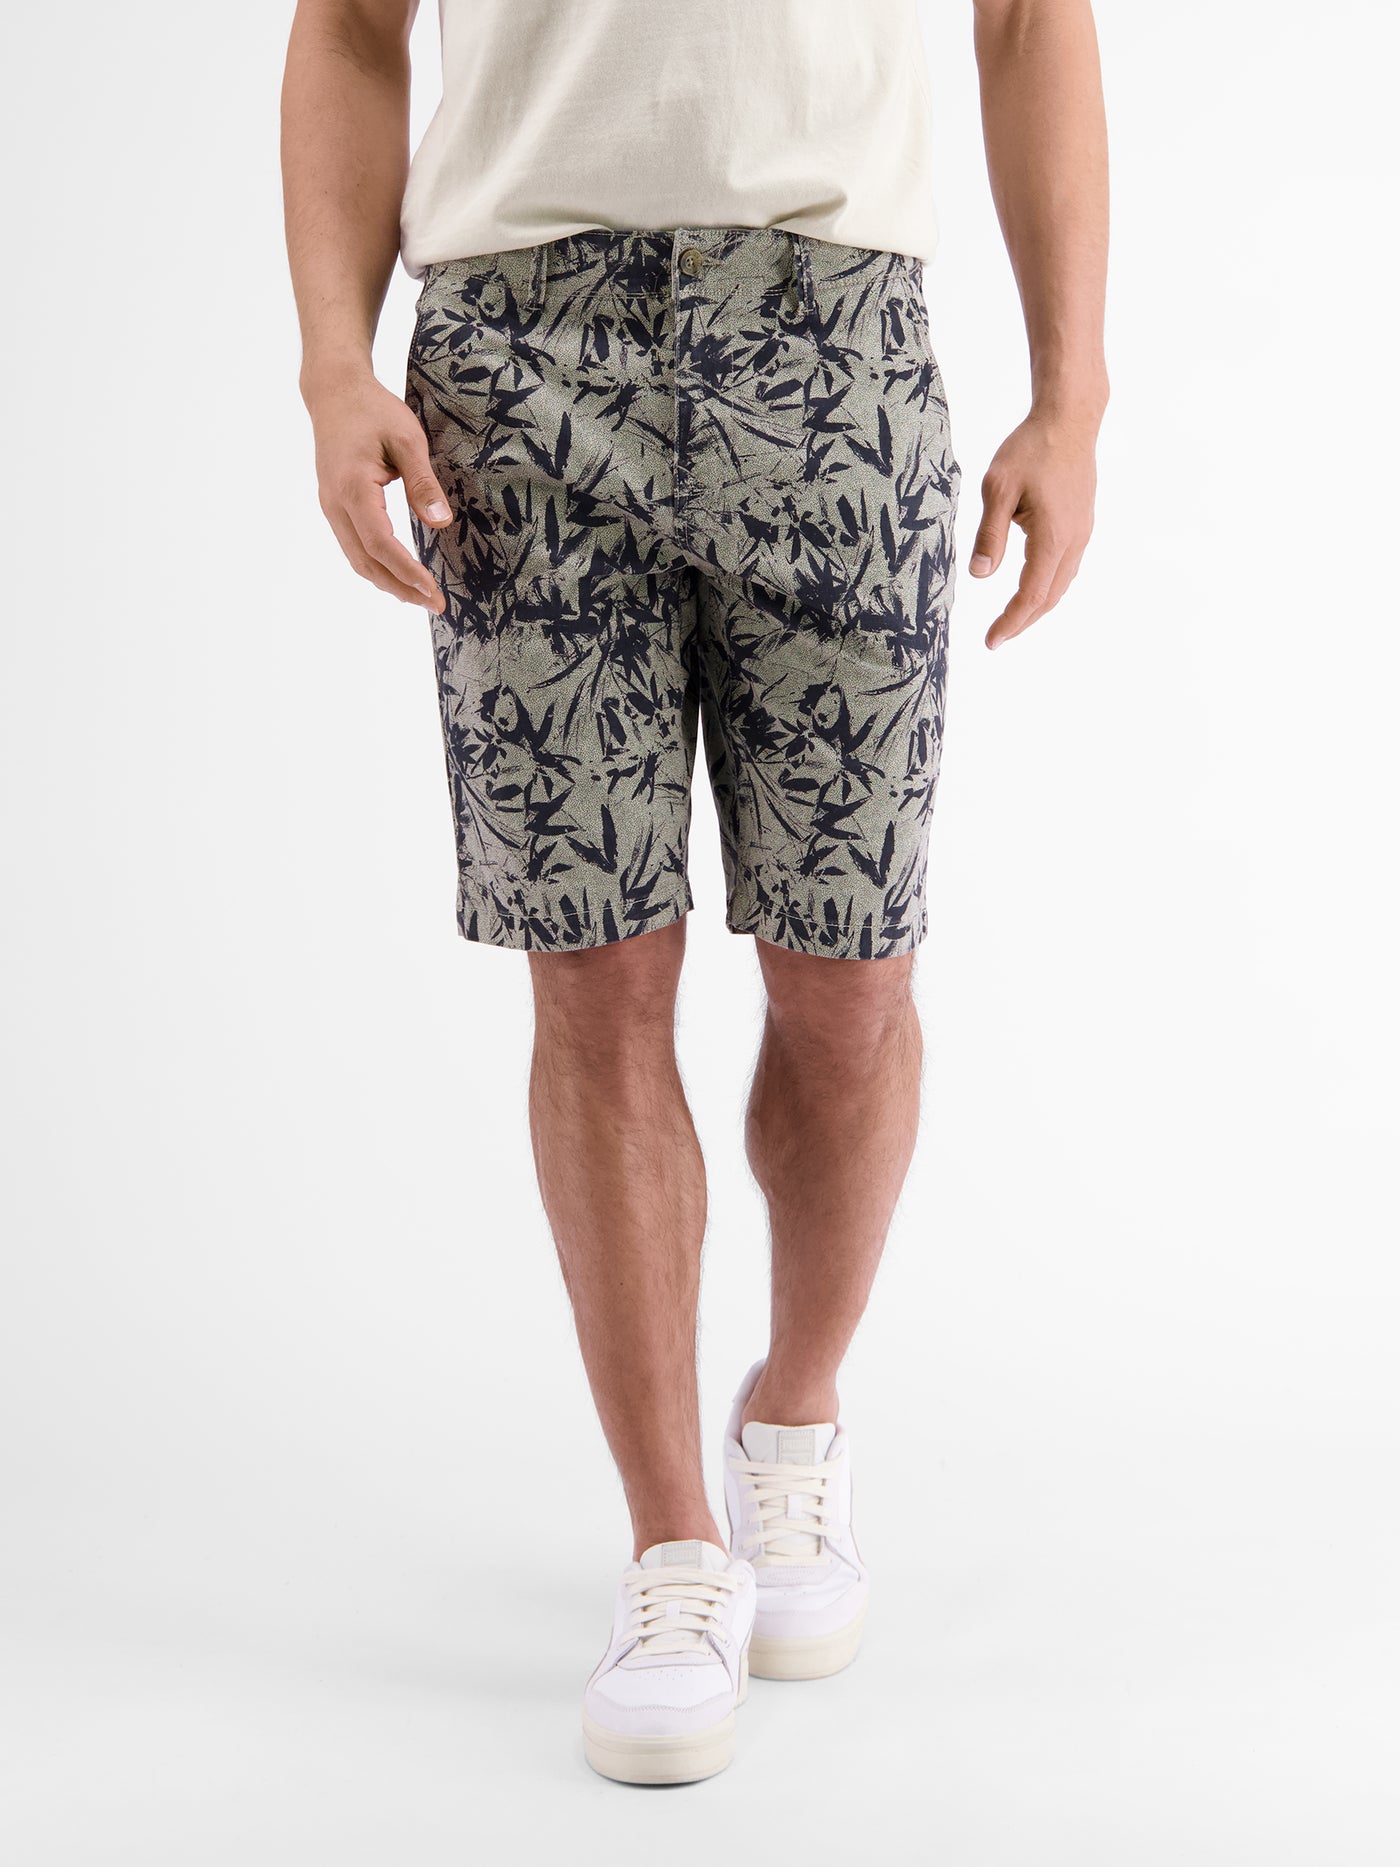 Chino Bermuda shorts with a floral print